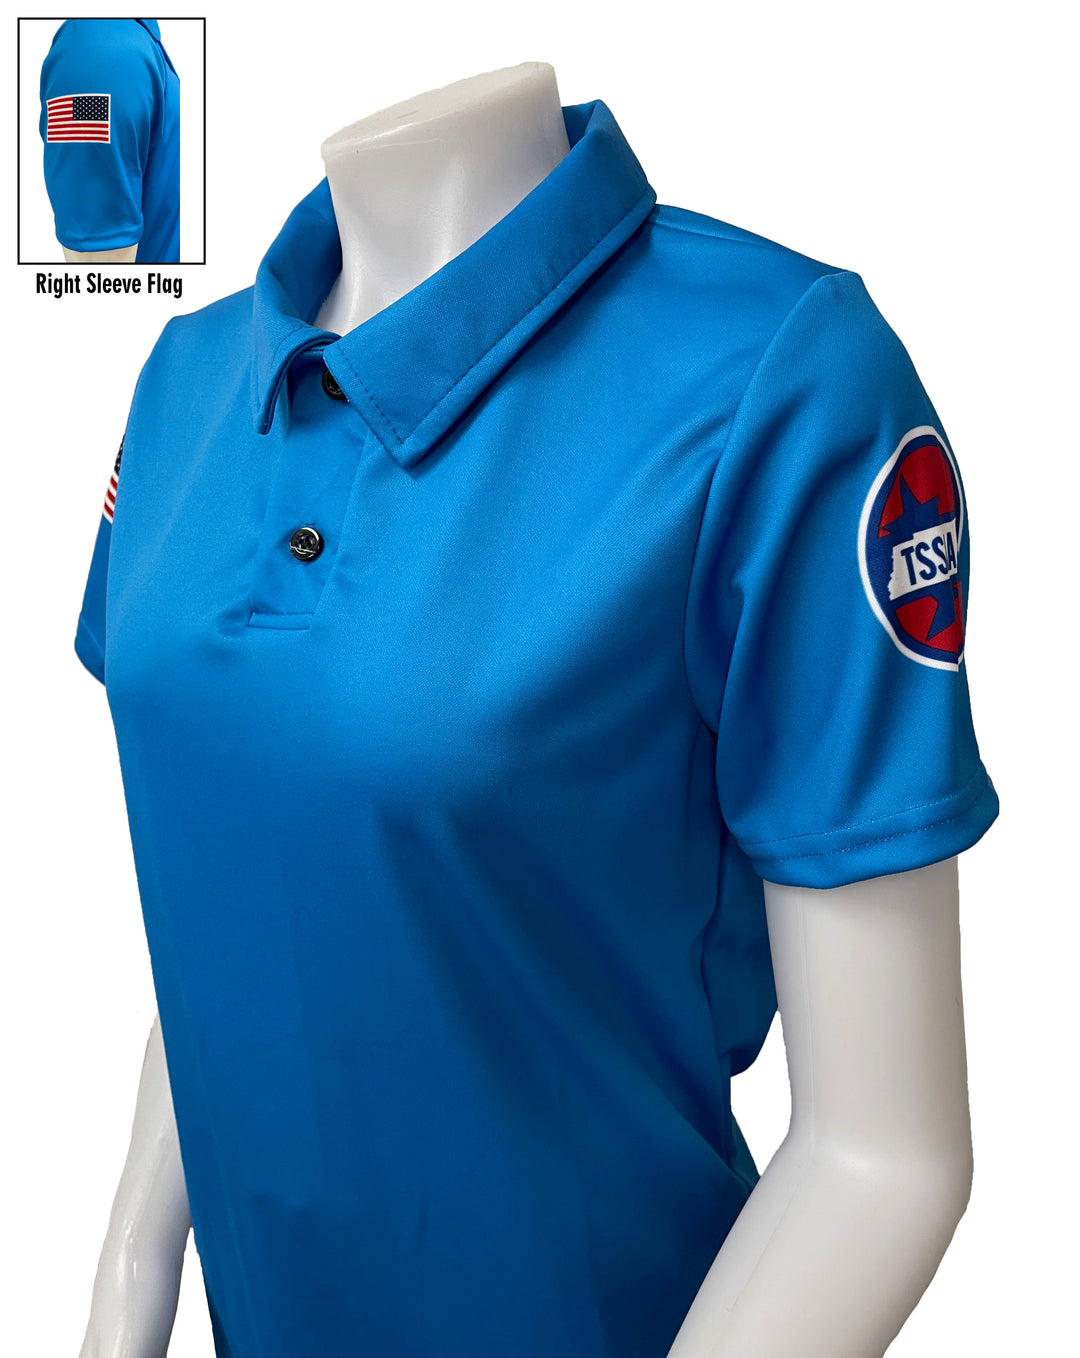 USA402TN - Smitty *NEW* "Made in USA" - BRIGHT BLUE - TSSAA Women's Volleyball Short Sleeve Shirt